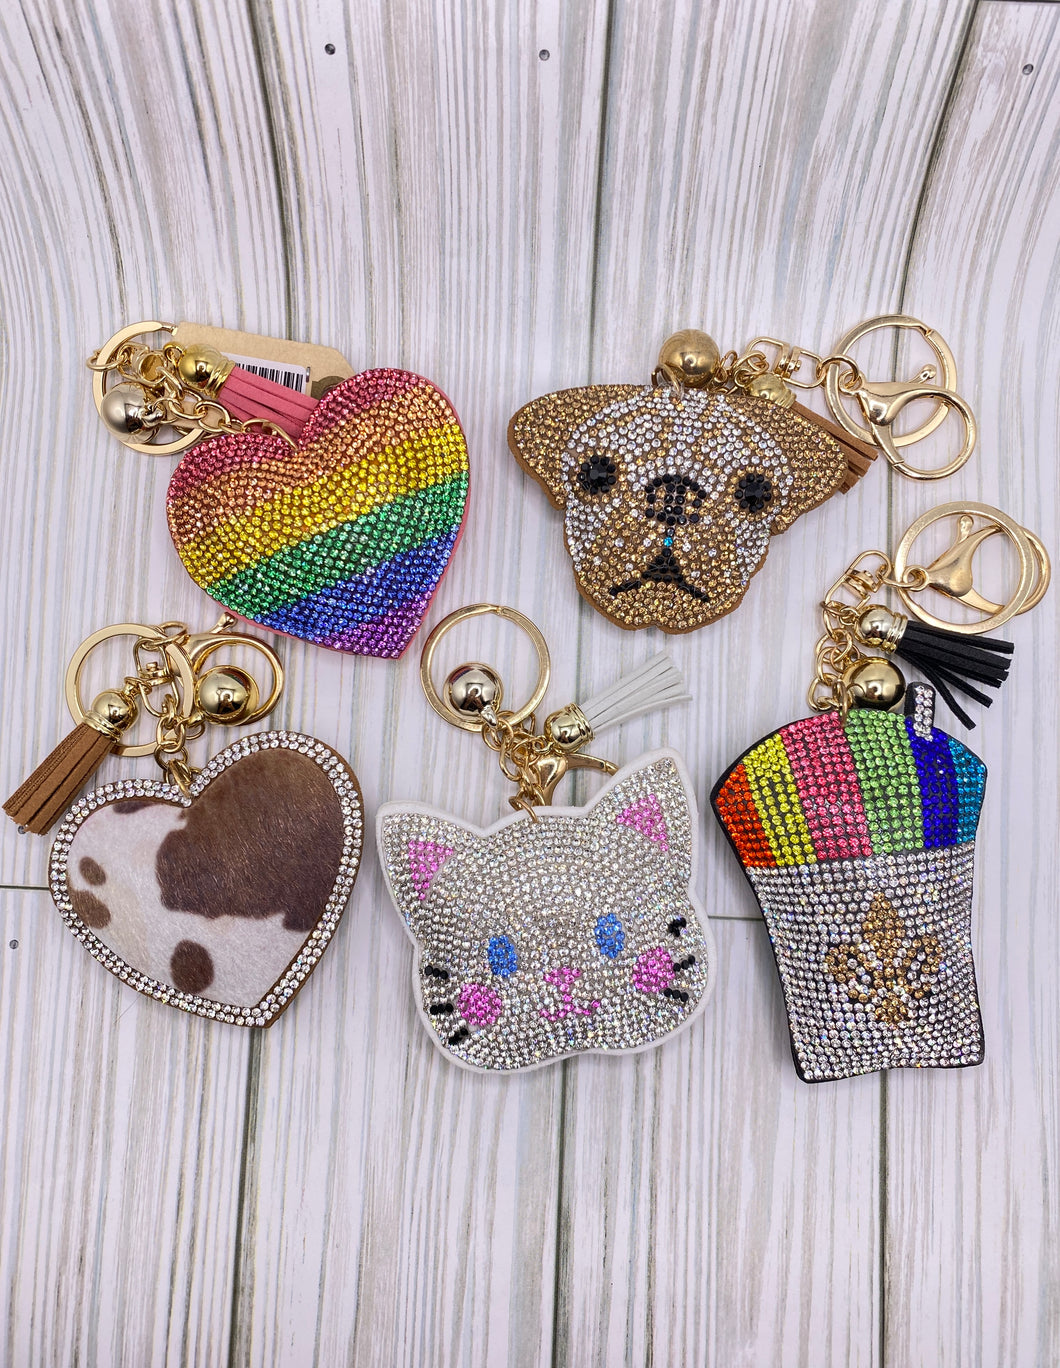 Bling Rhinestone Puffy Keychains - Rainbow Heart, Pug, Cow Hart, Wht. Cat, Rainbow Cup